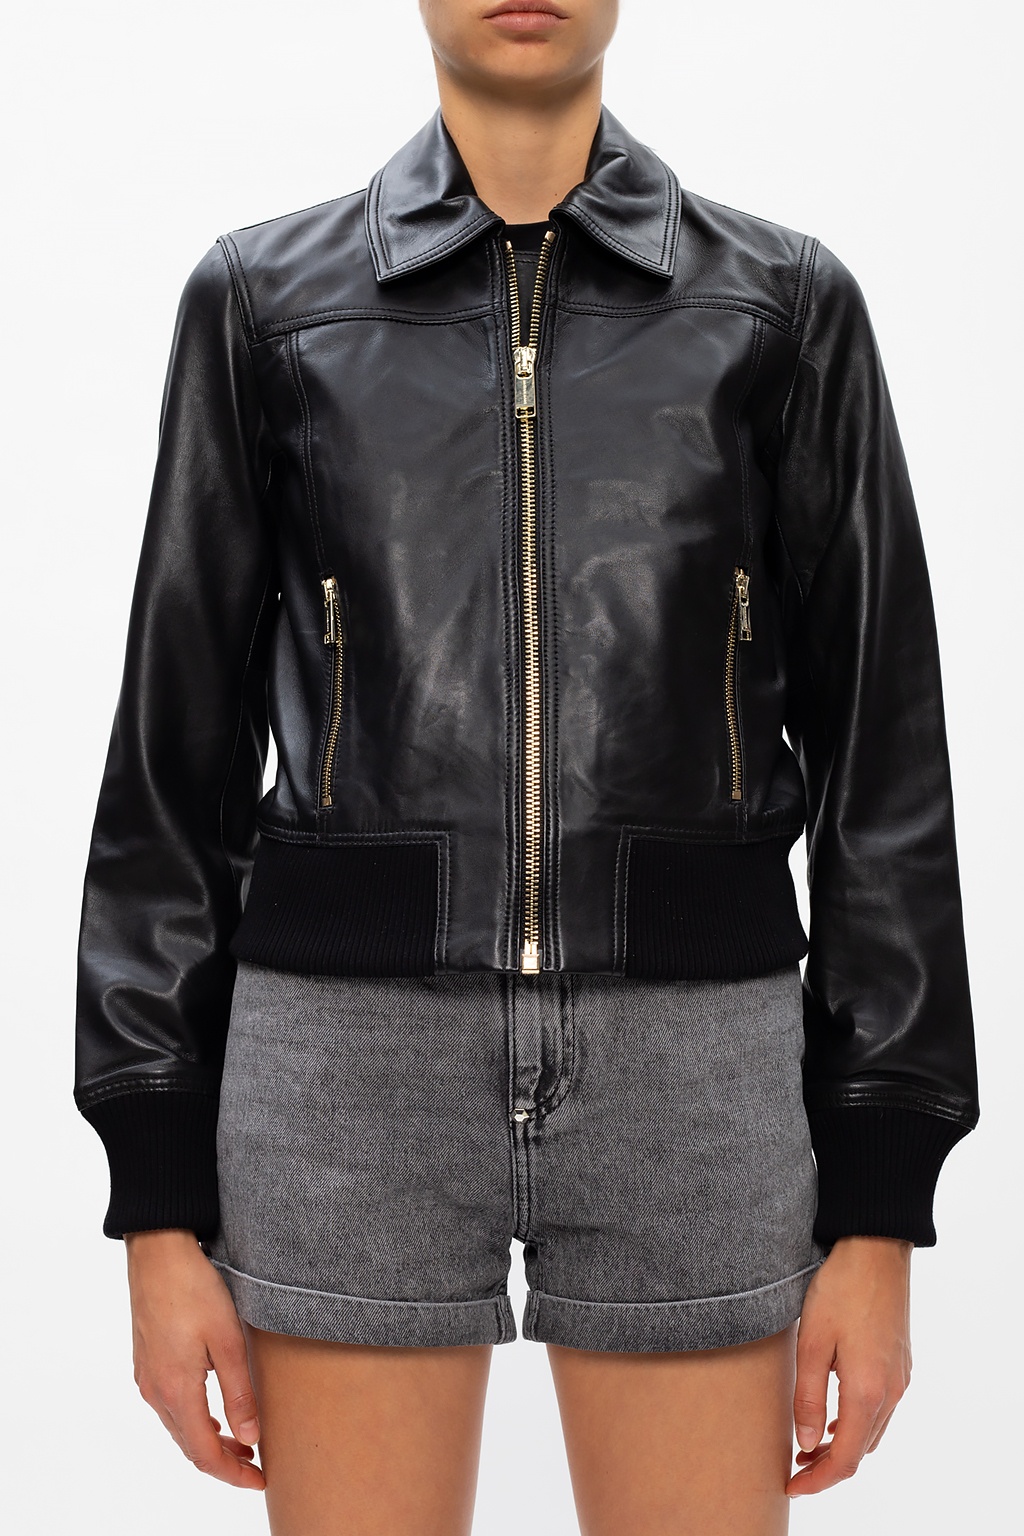 MICHAEL KORS Womens SnapCollar Moto Leather Jacket  Zooloo Leather